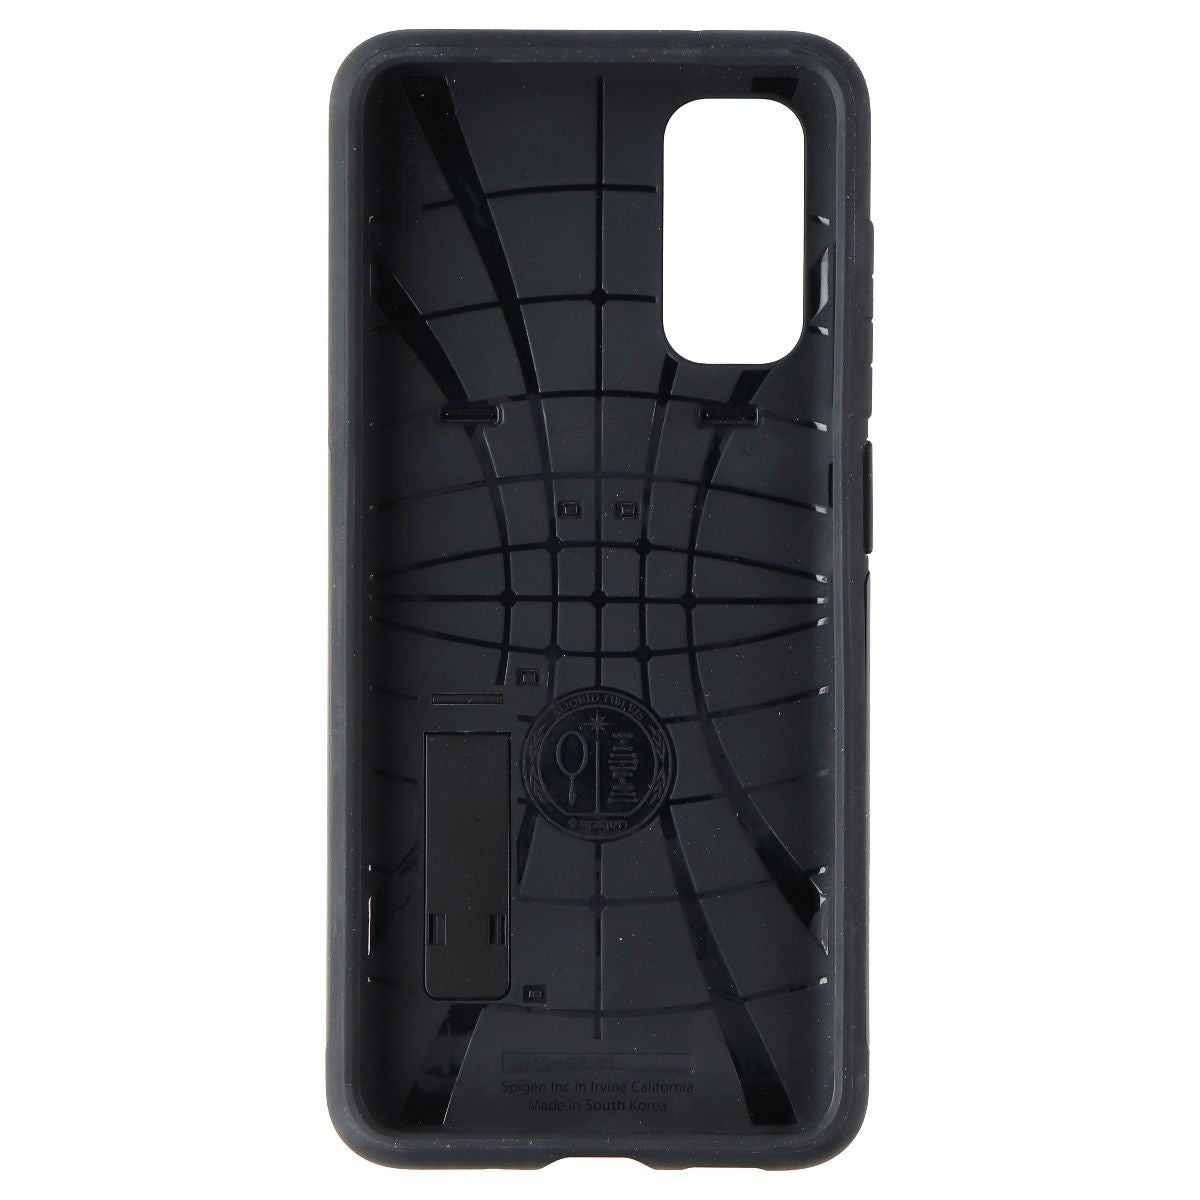 Spigen Slim Armor Designed for Samsung Galaxy S20 Case (2020) - Black Cell Phone - Cases, Covers & Skins Spigen    - Simple Cell Bulk Wholesale Pricing - USA Seller